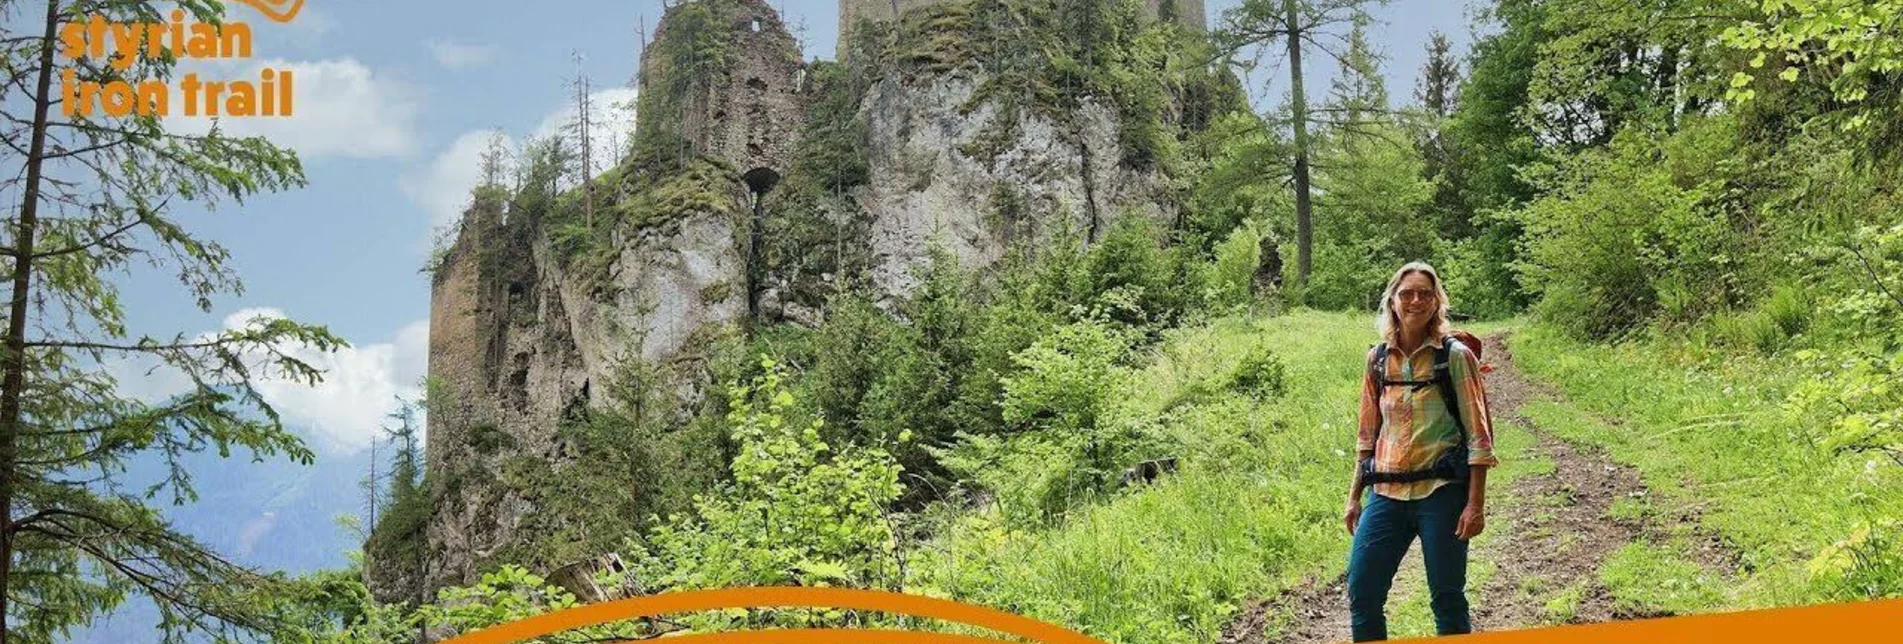 Hiking route Styrian Iron Trail - 2. Etappe Ulrichskirche / Seiz - Mautern - Touren-Impression #1 | © wegesaktiv